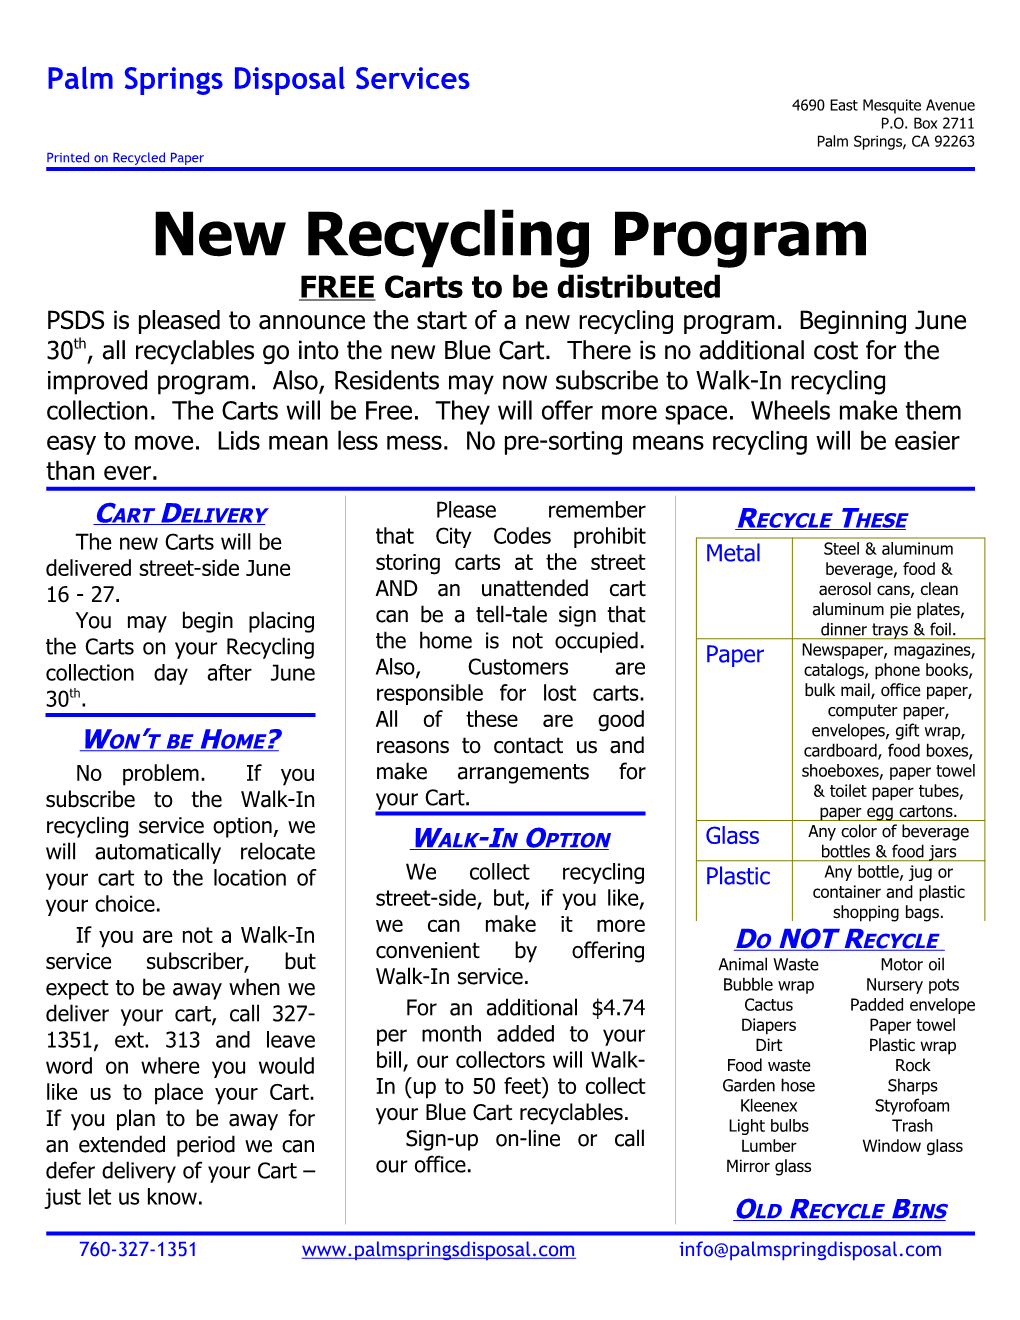 New Recycling Program